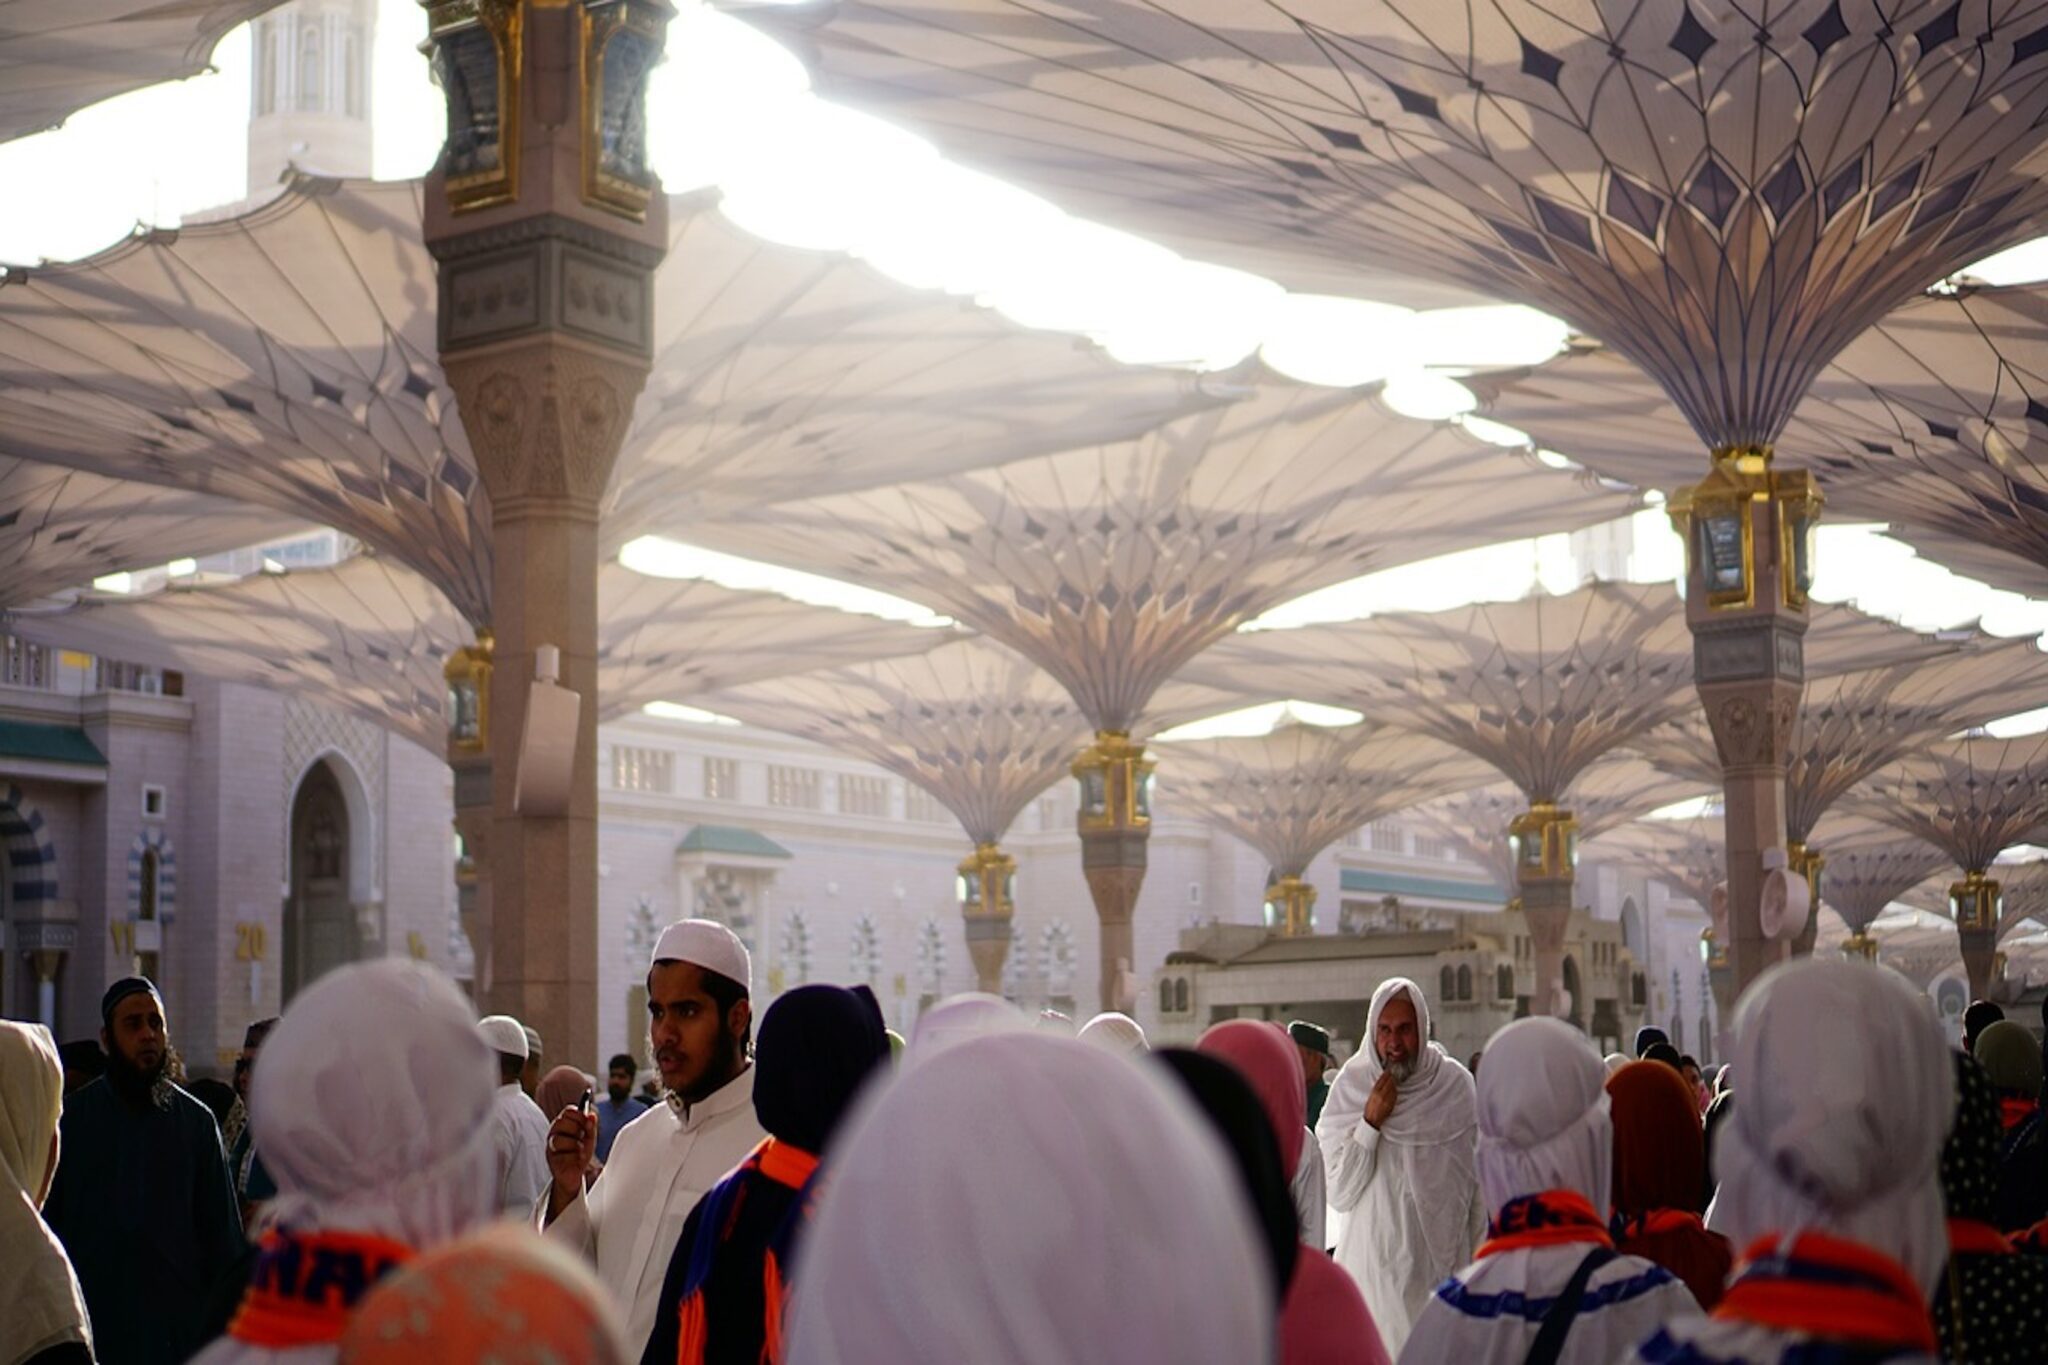 Over 1,000 Die in Hajj Pilgrimage Amid Global Heatwave